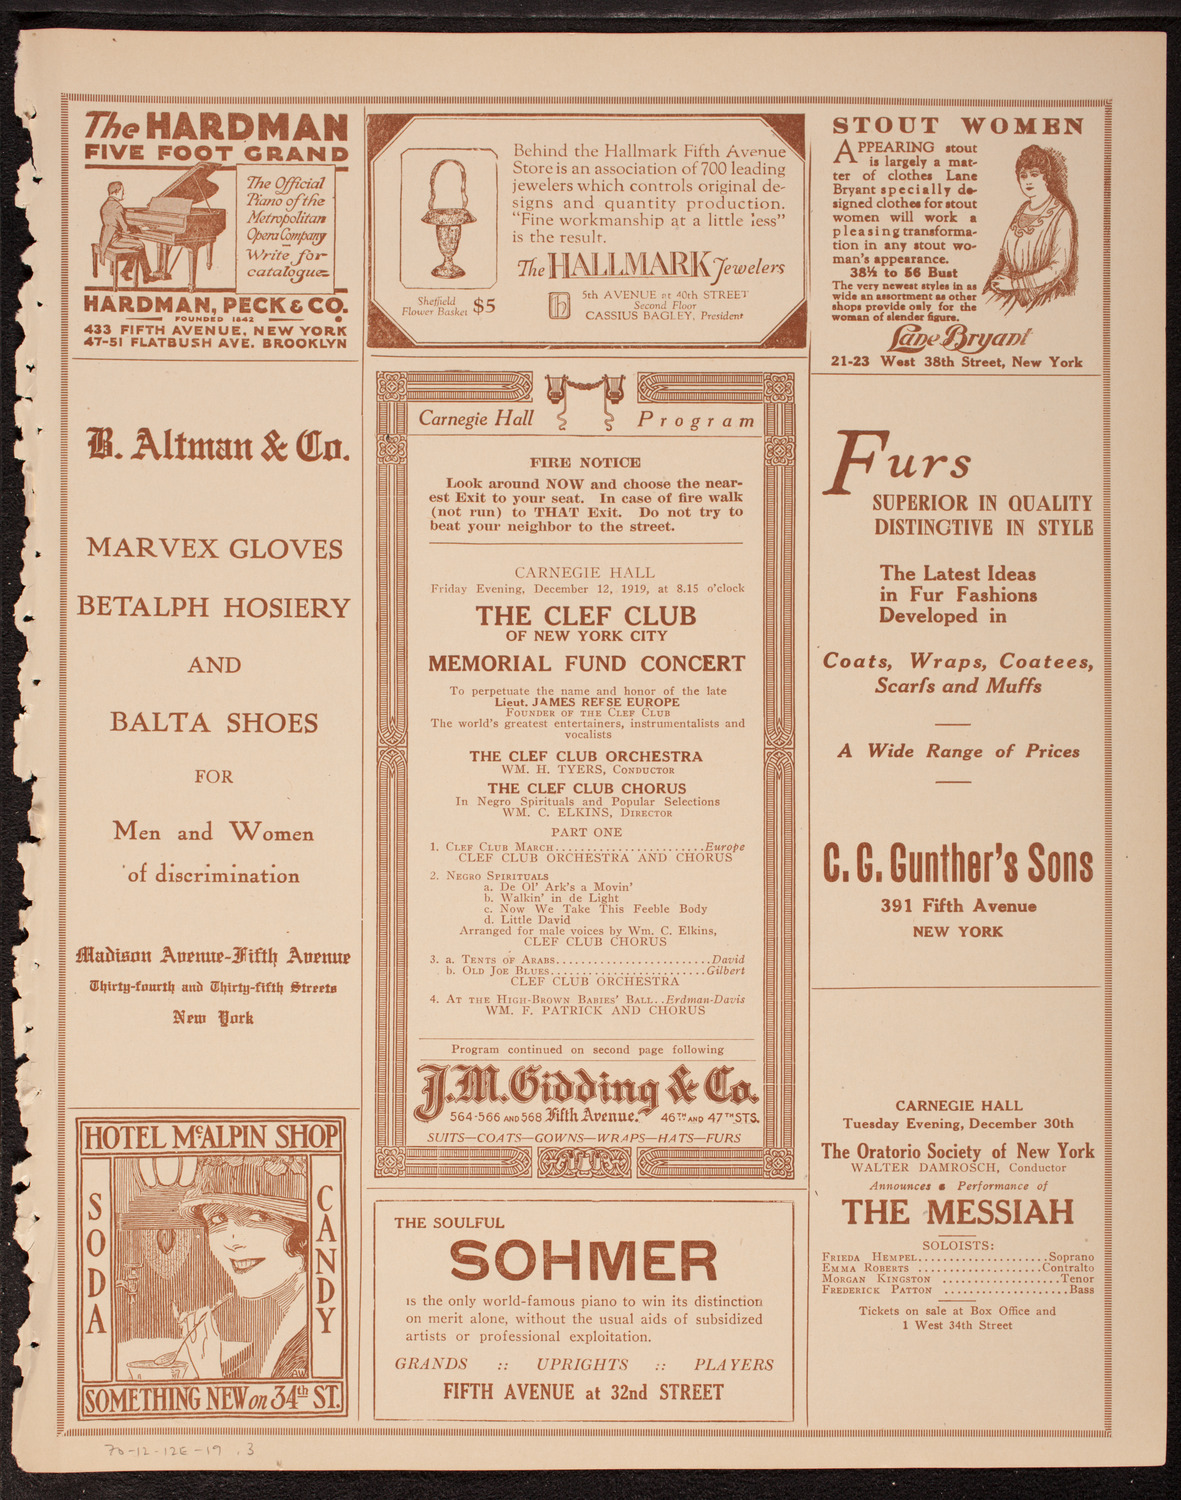 Clef Club Memorial Fund Concert in honor of James Reese Europe, December 12, 1919, program page 5